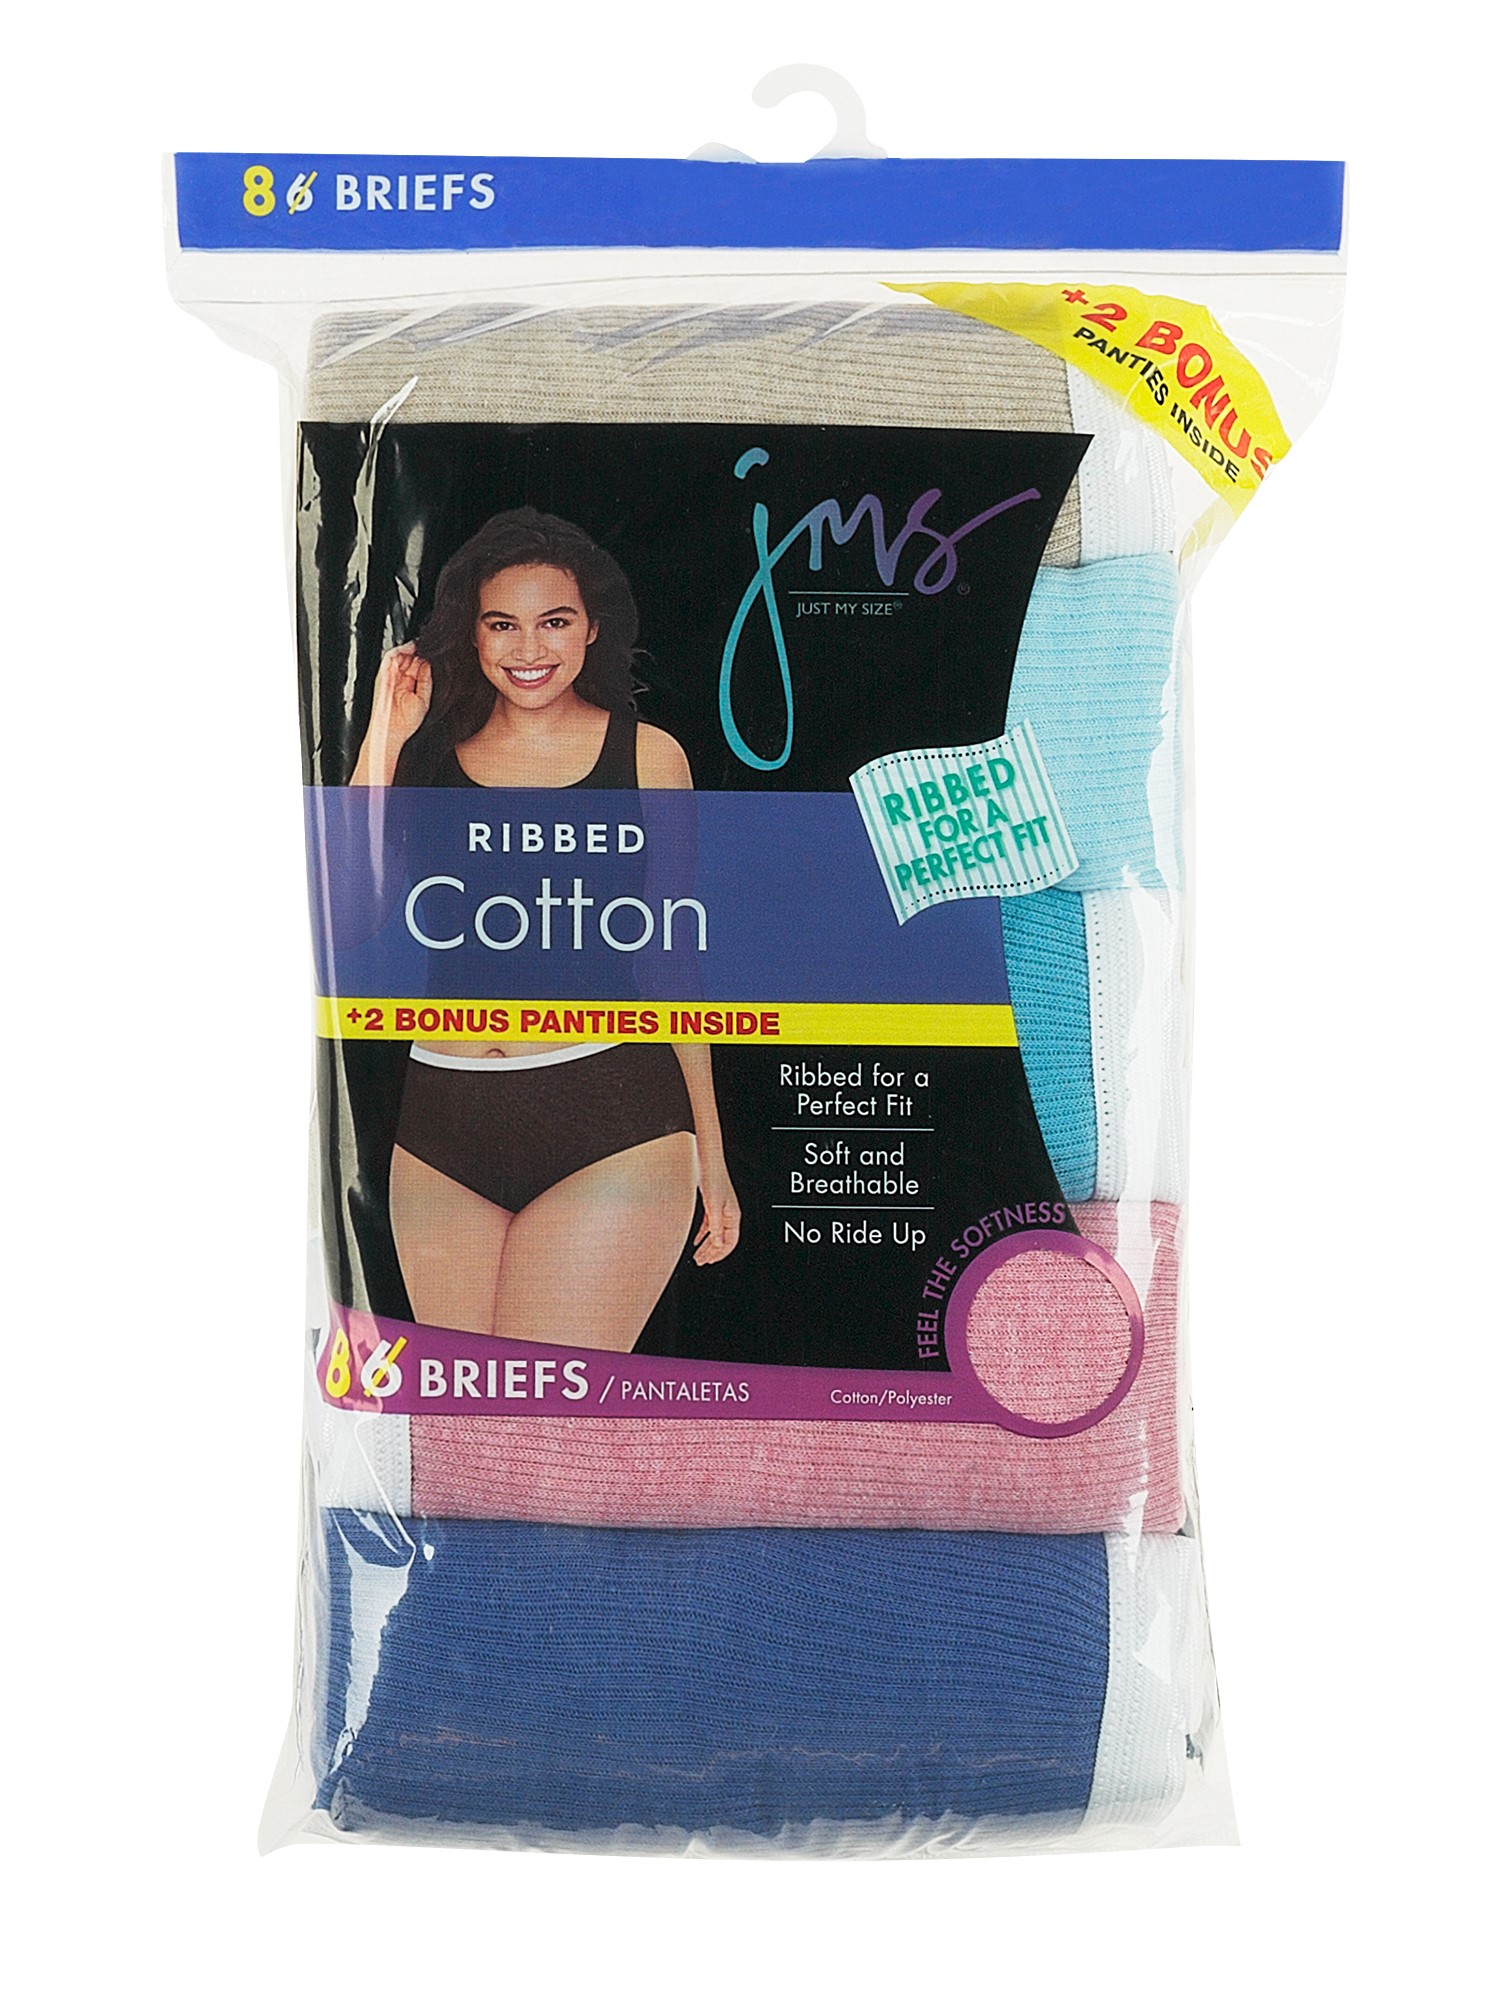 Just My Size Women's Ribbed Cotton Brief Underwear, 6-Pack